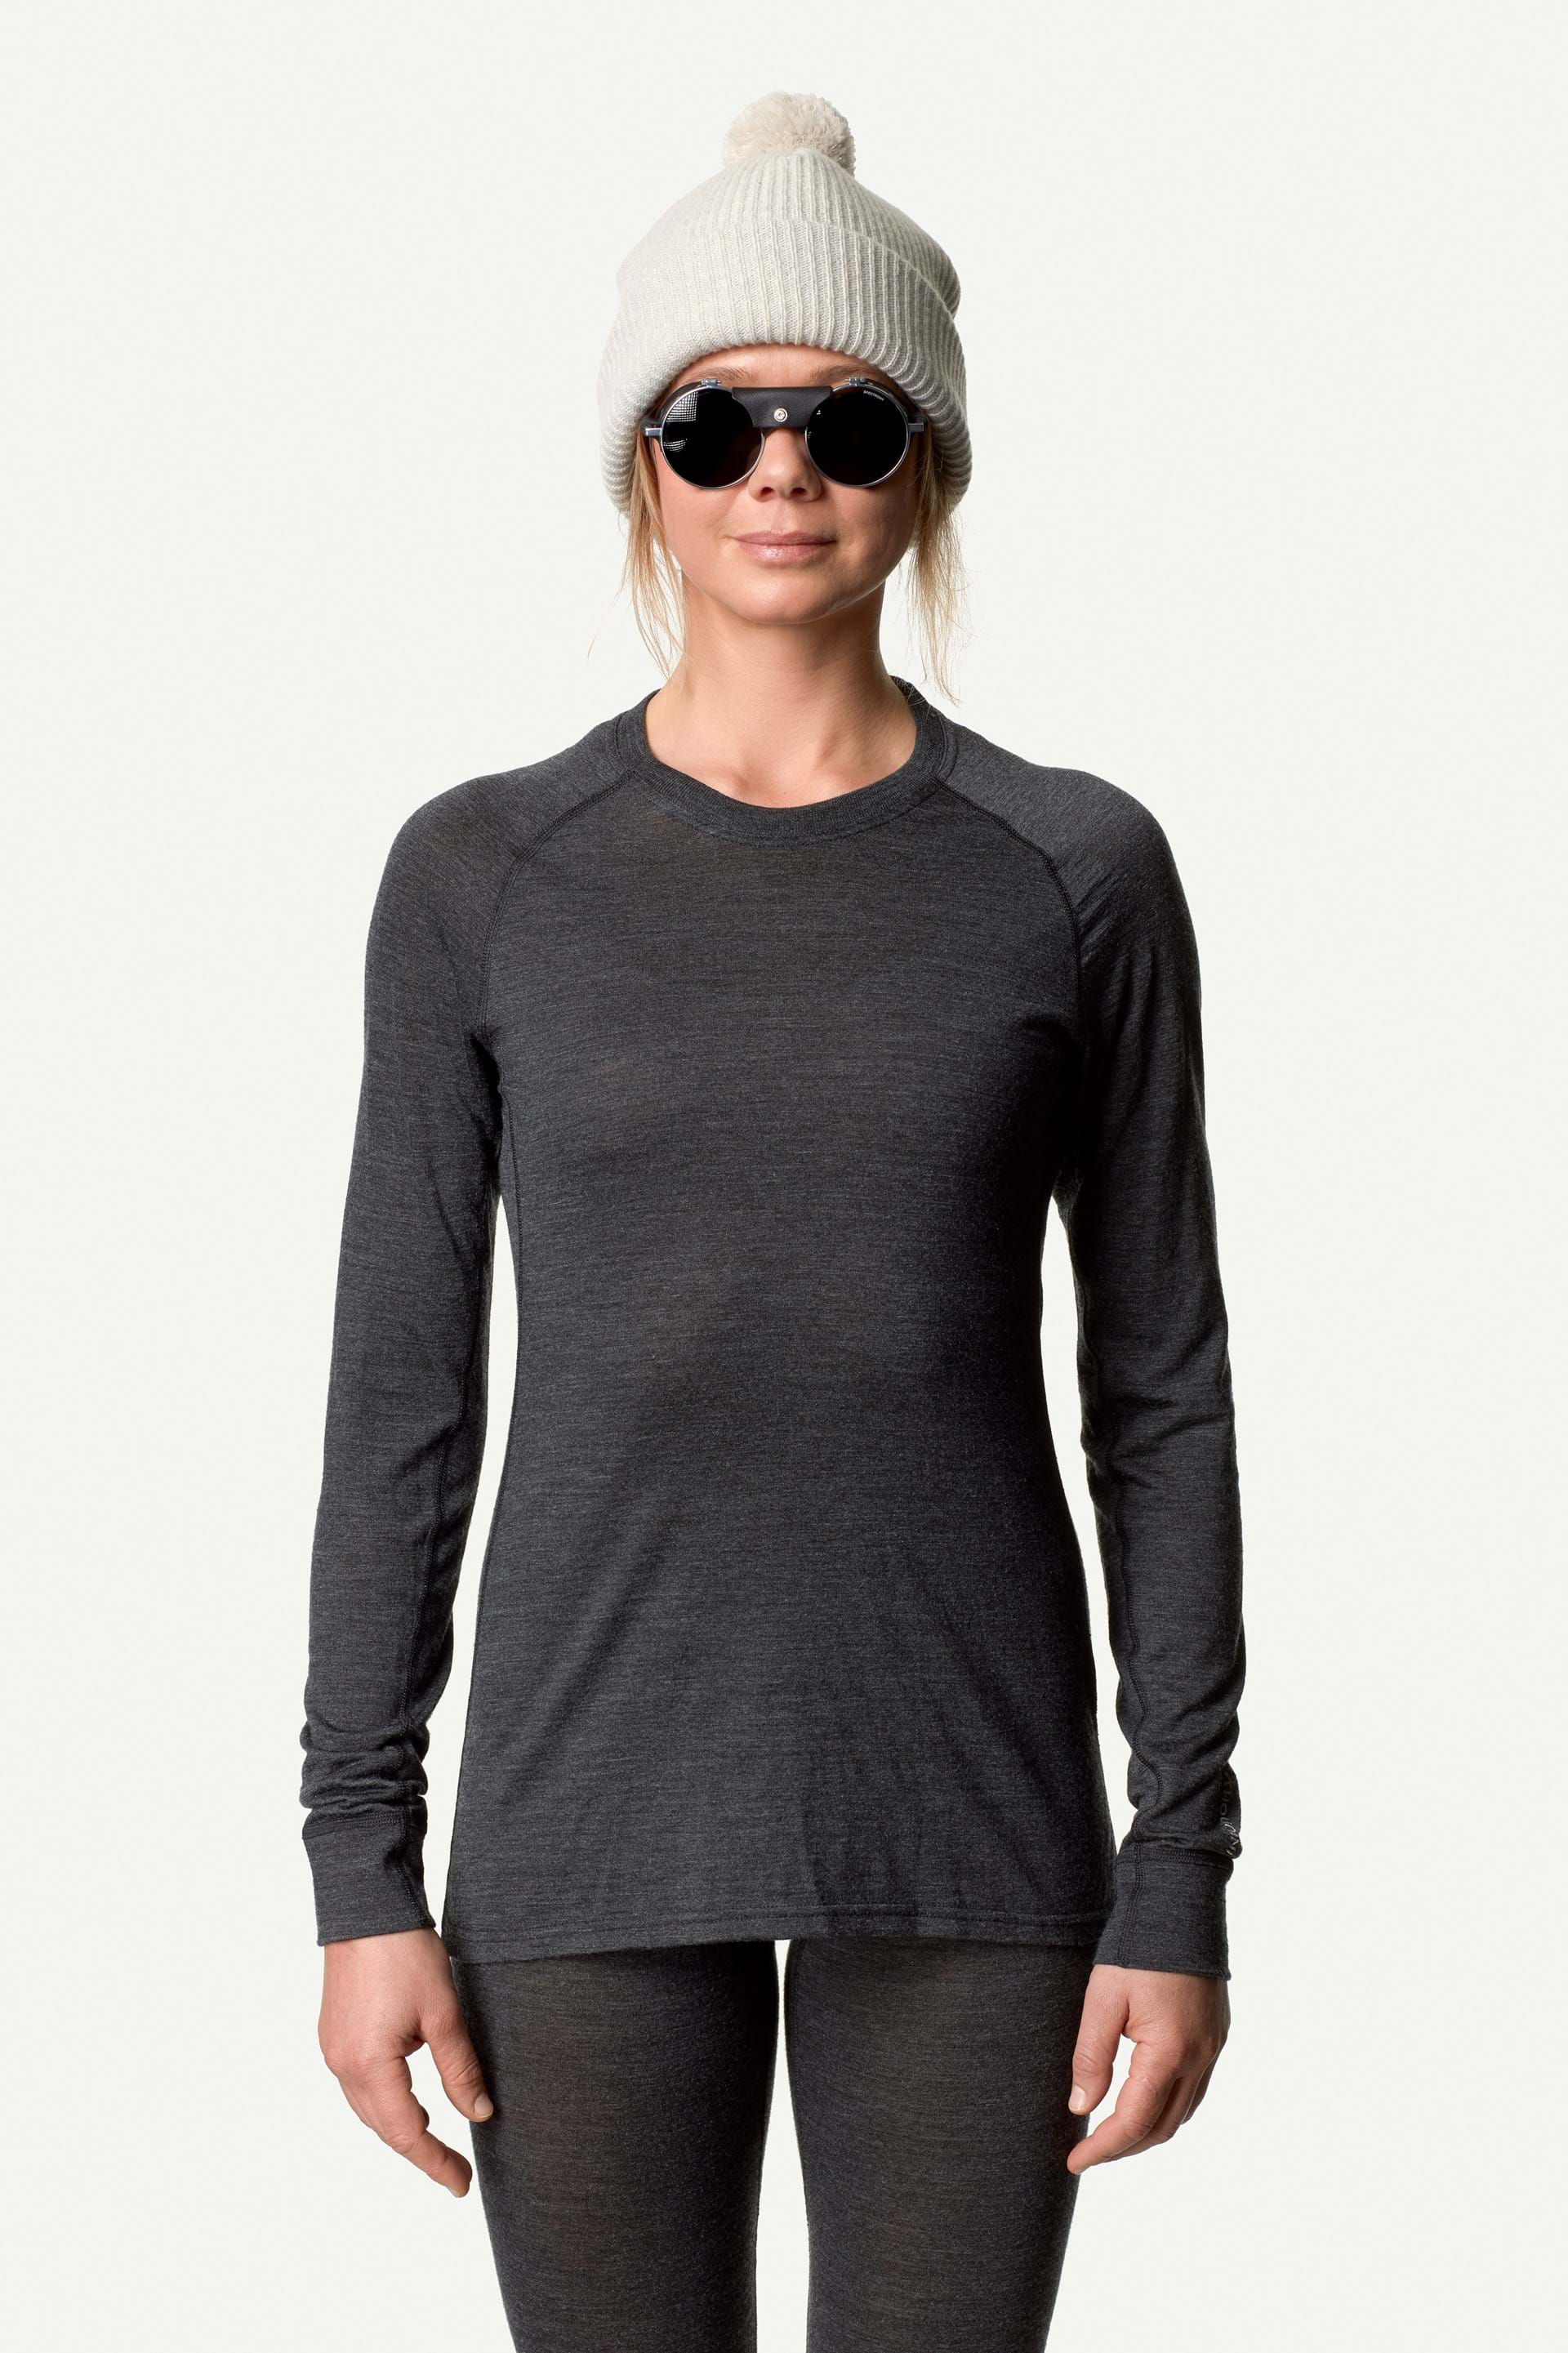 Woman wearing a black merino wool long sleeve crew shirt, perfect for skiing.